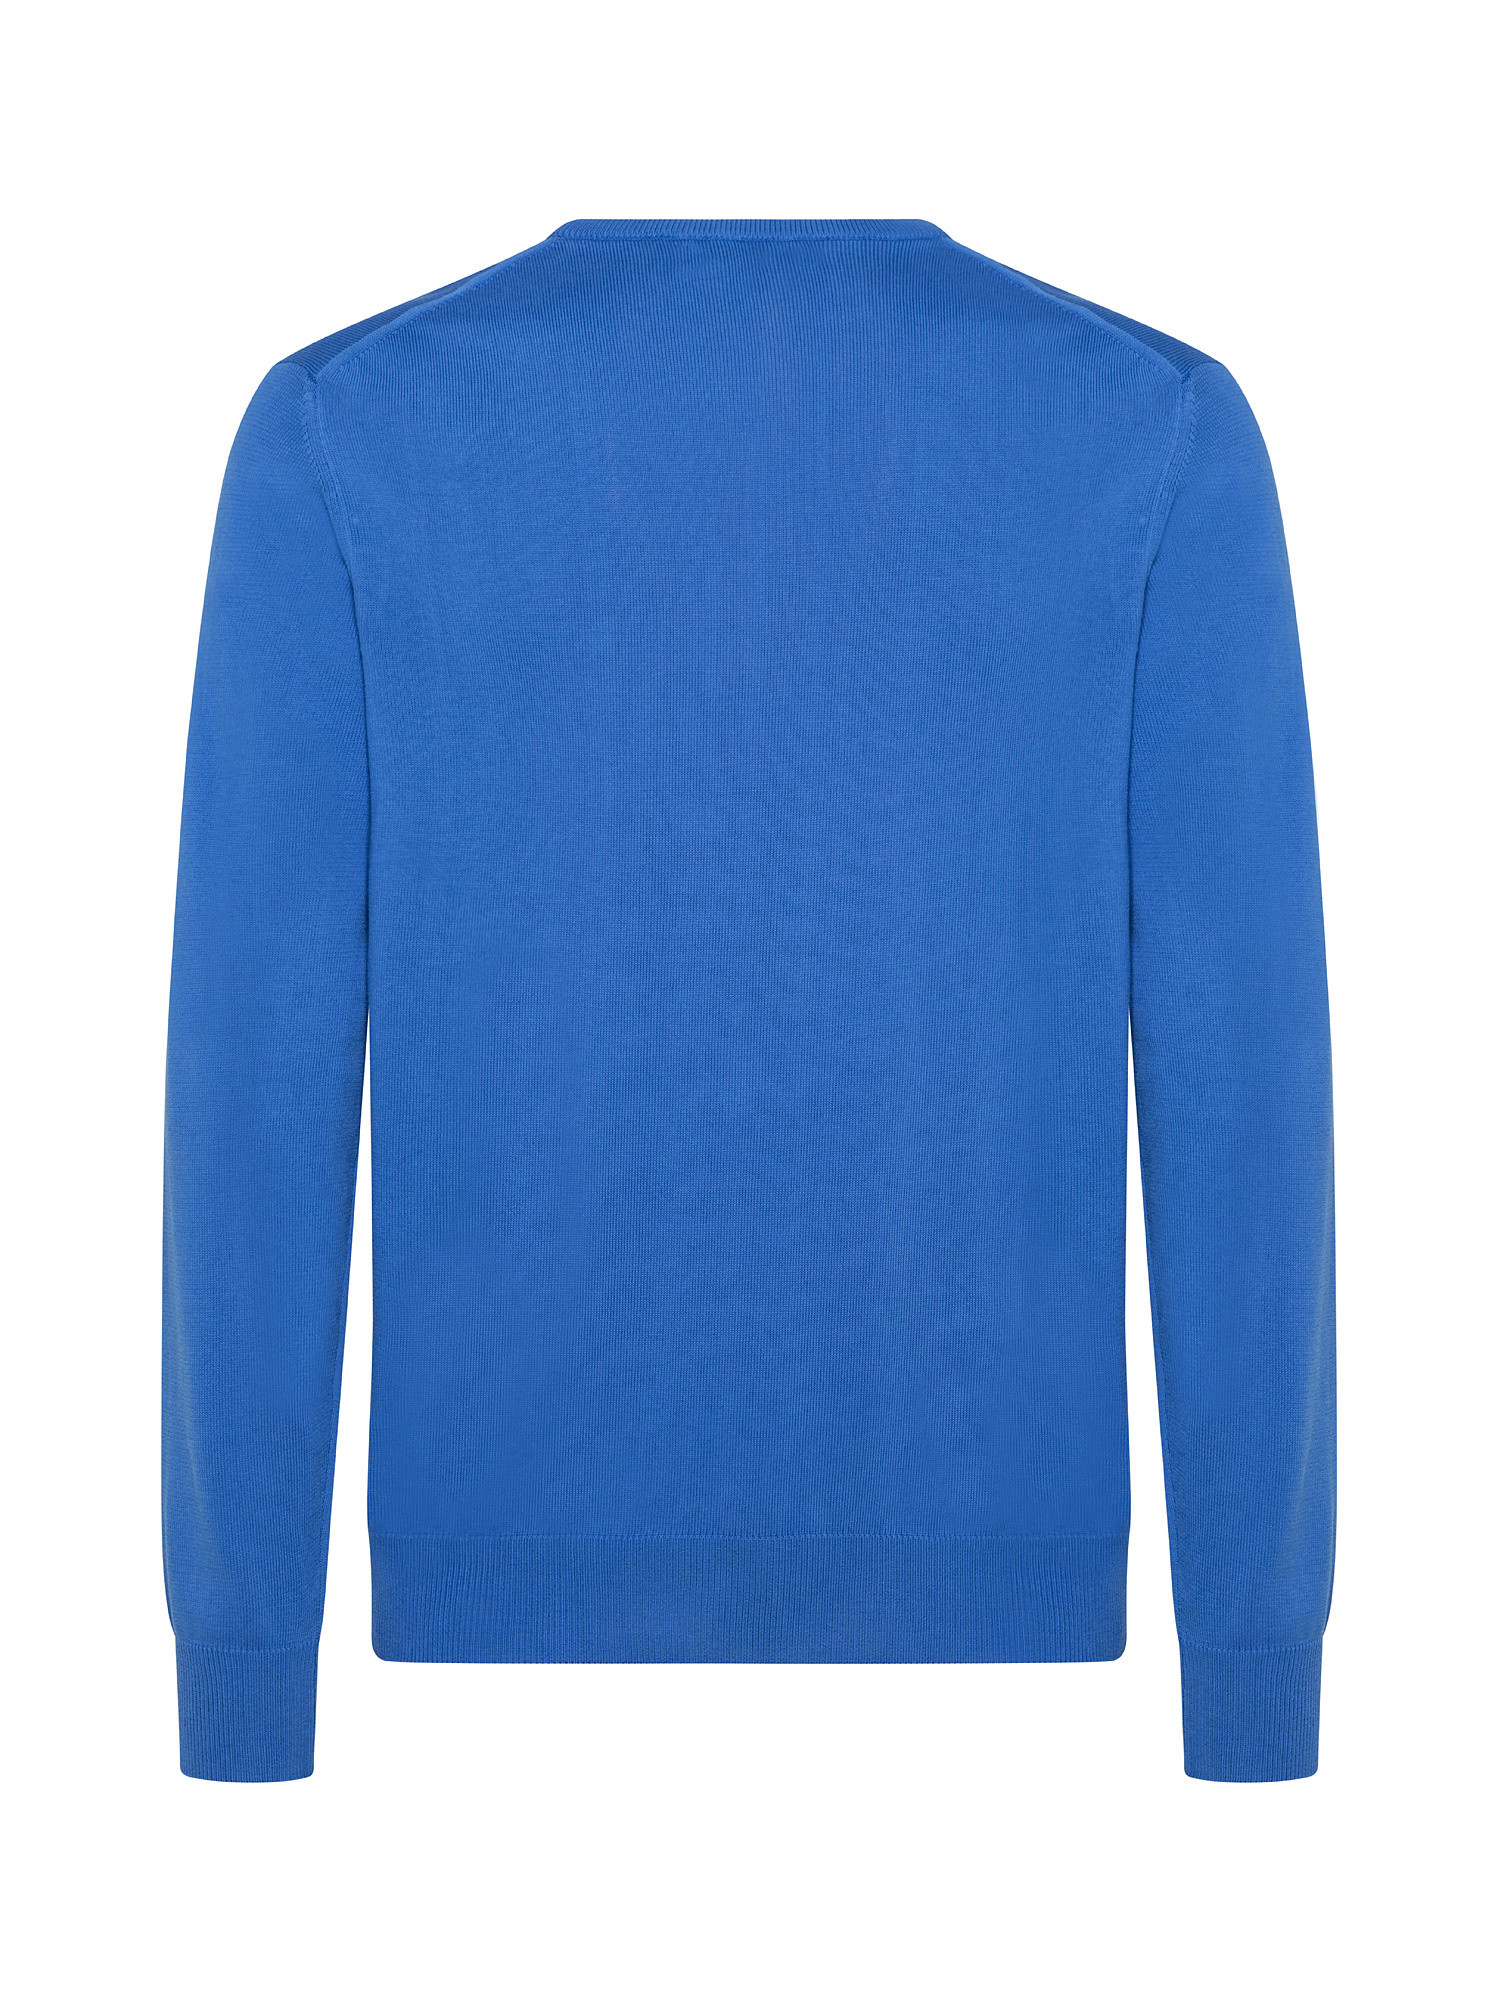 Pure cotton crewneck sweater, Blue Dark, large image number 1